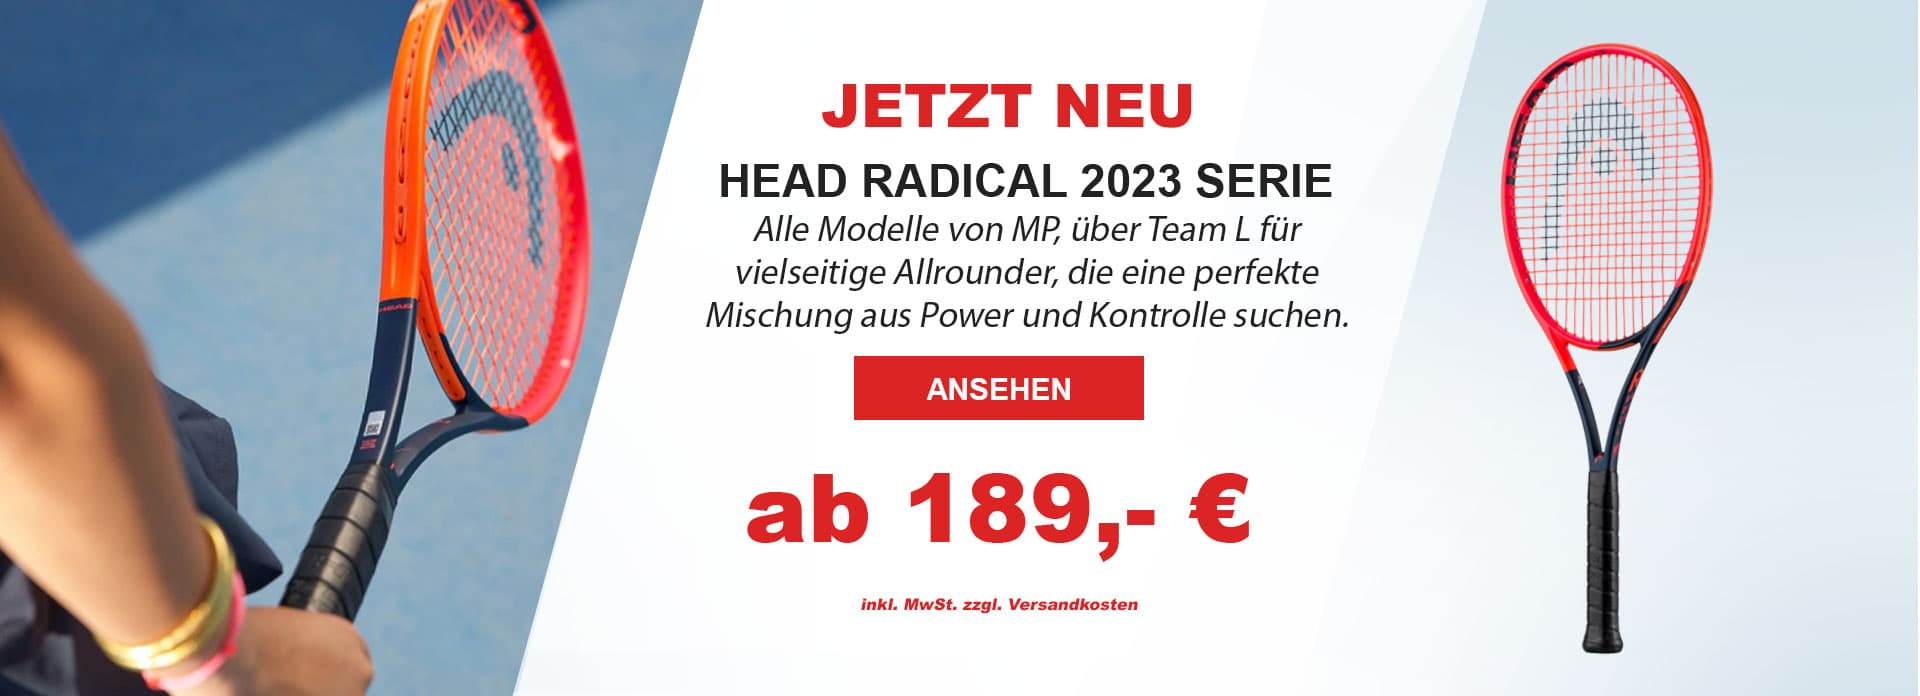 head-radical-2023-serie